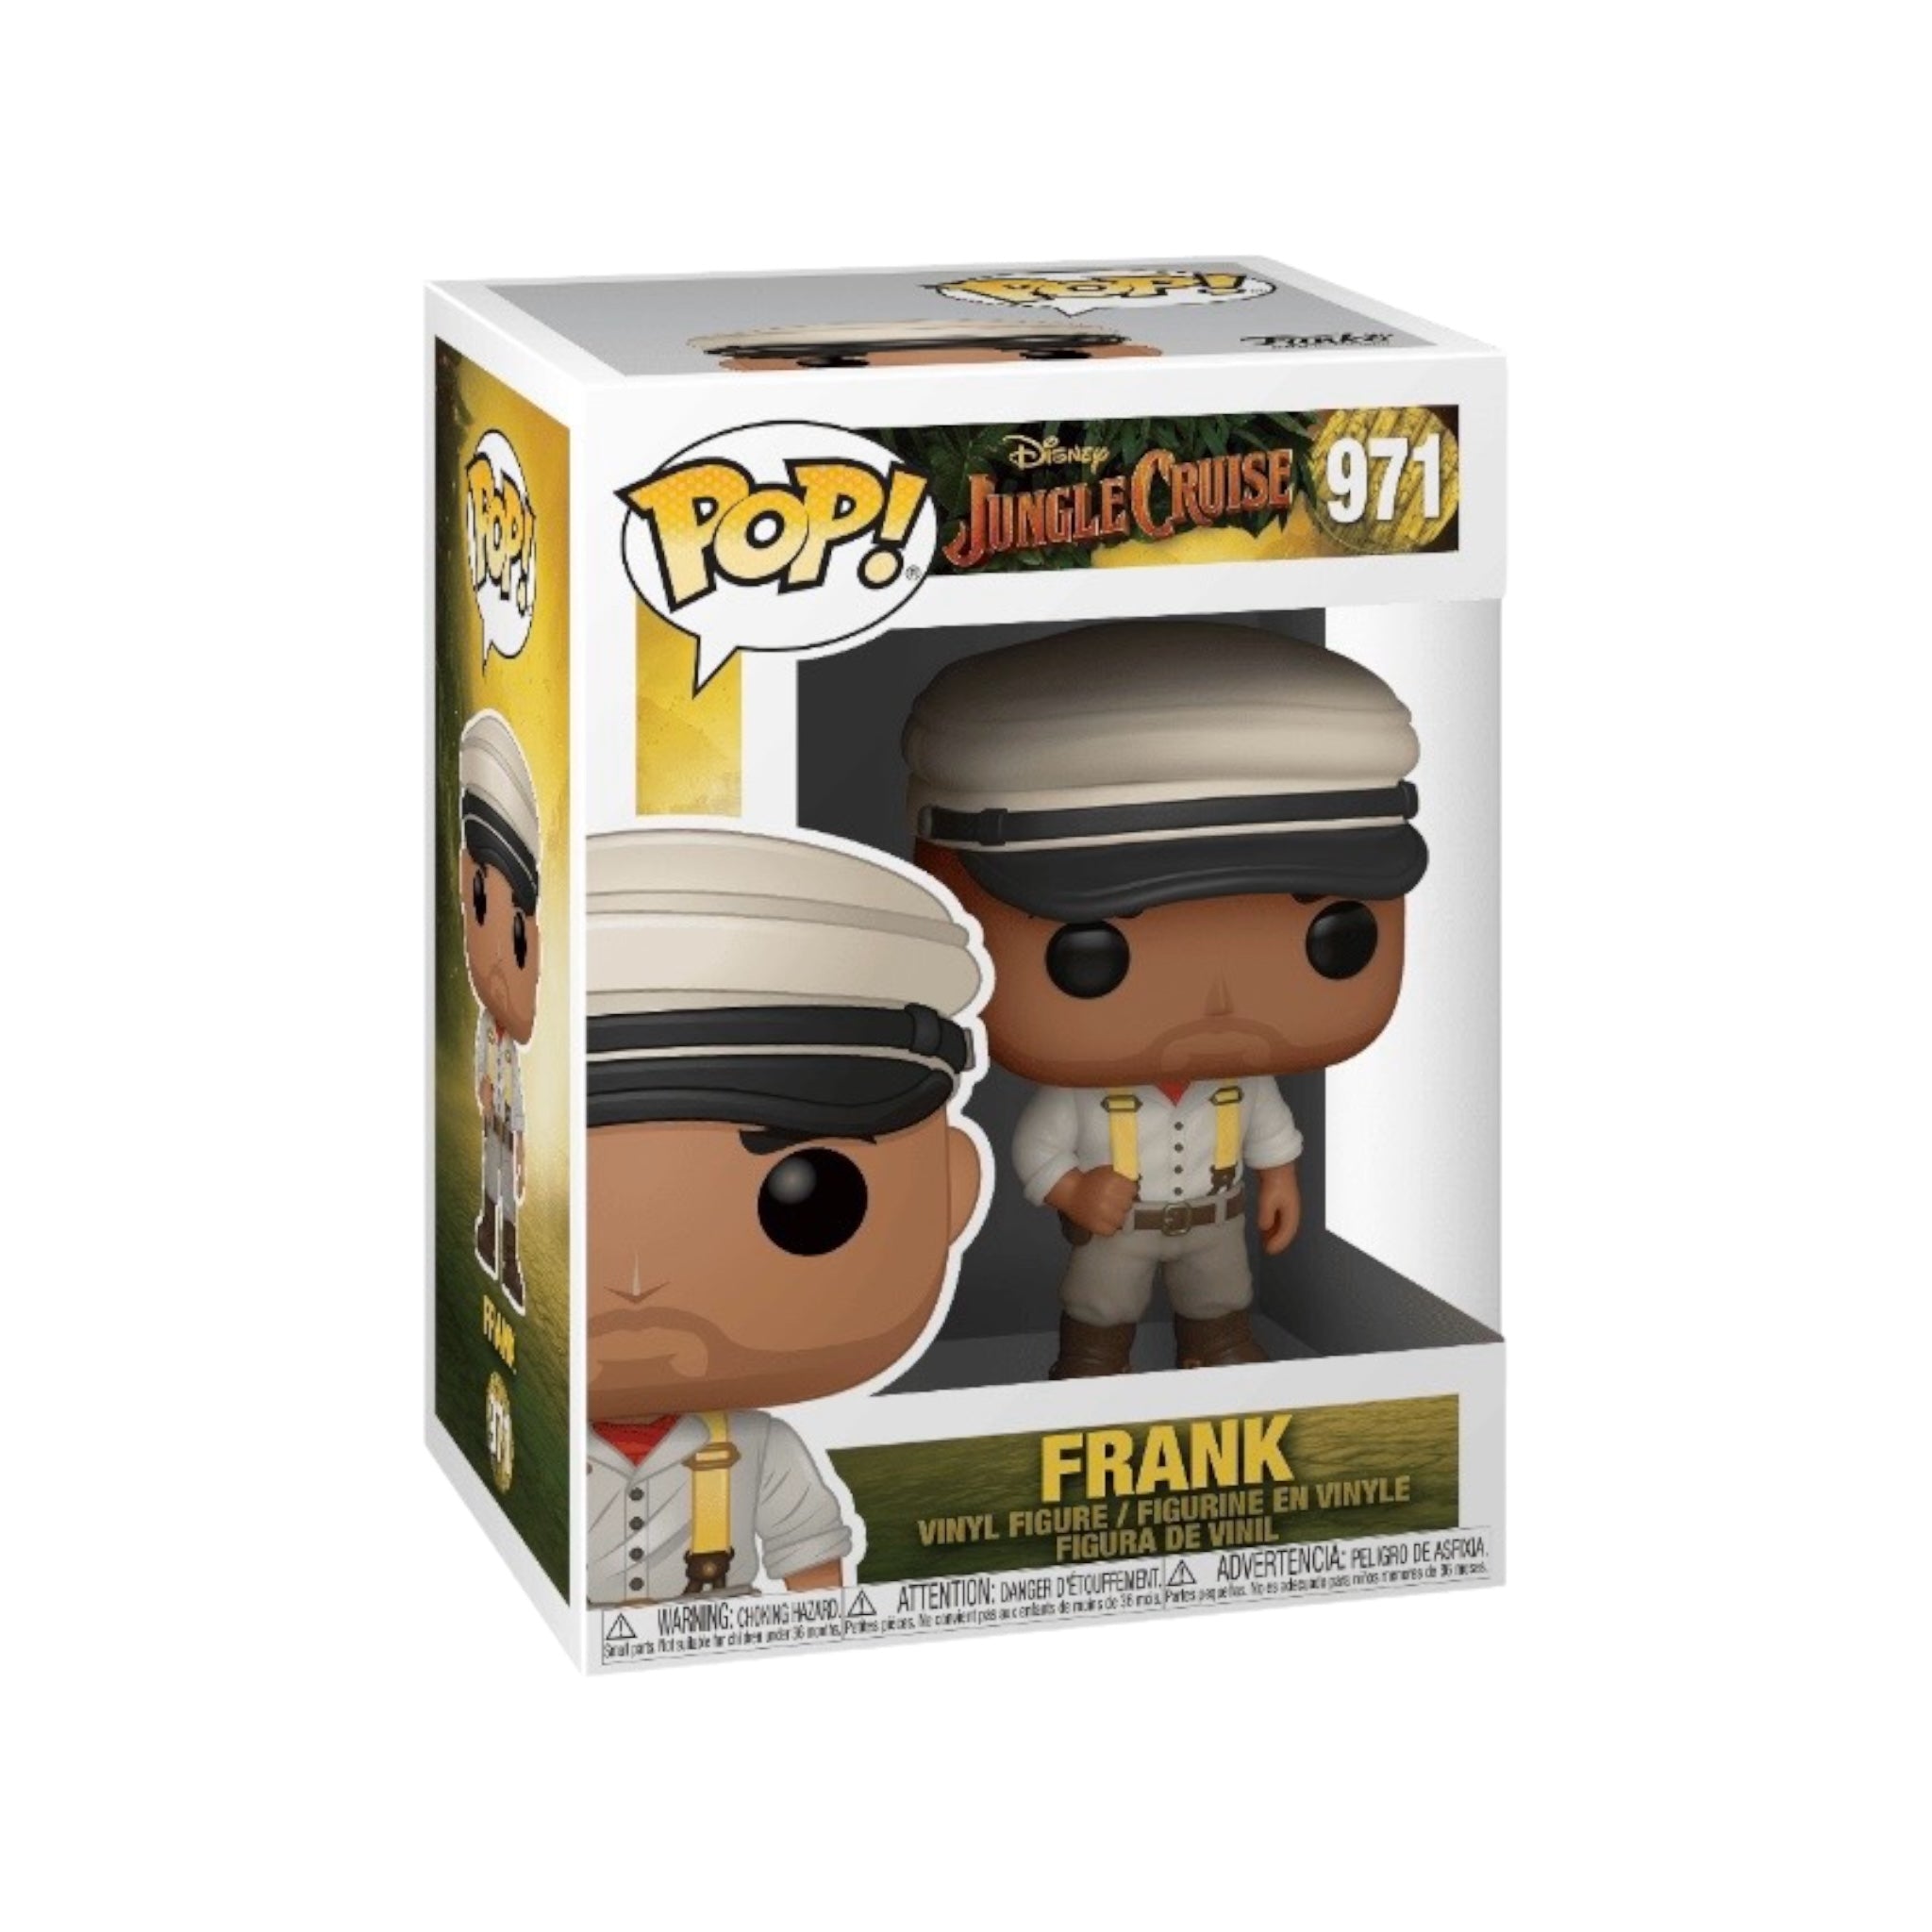 Frank #971 Funko Pop! - Jungle Cruise